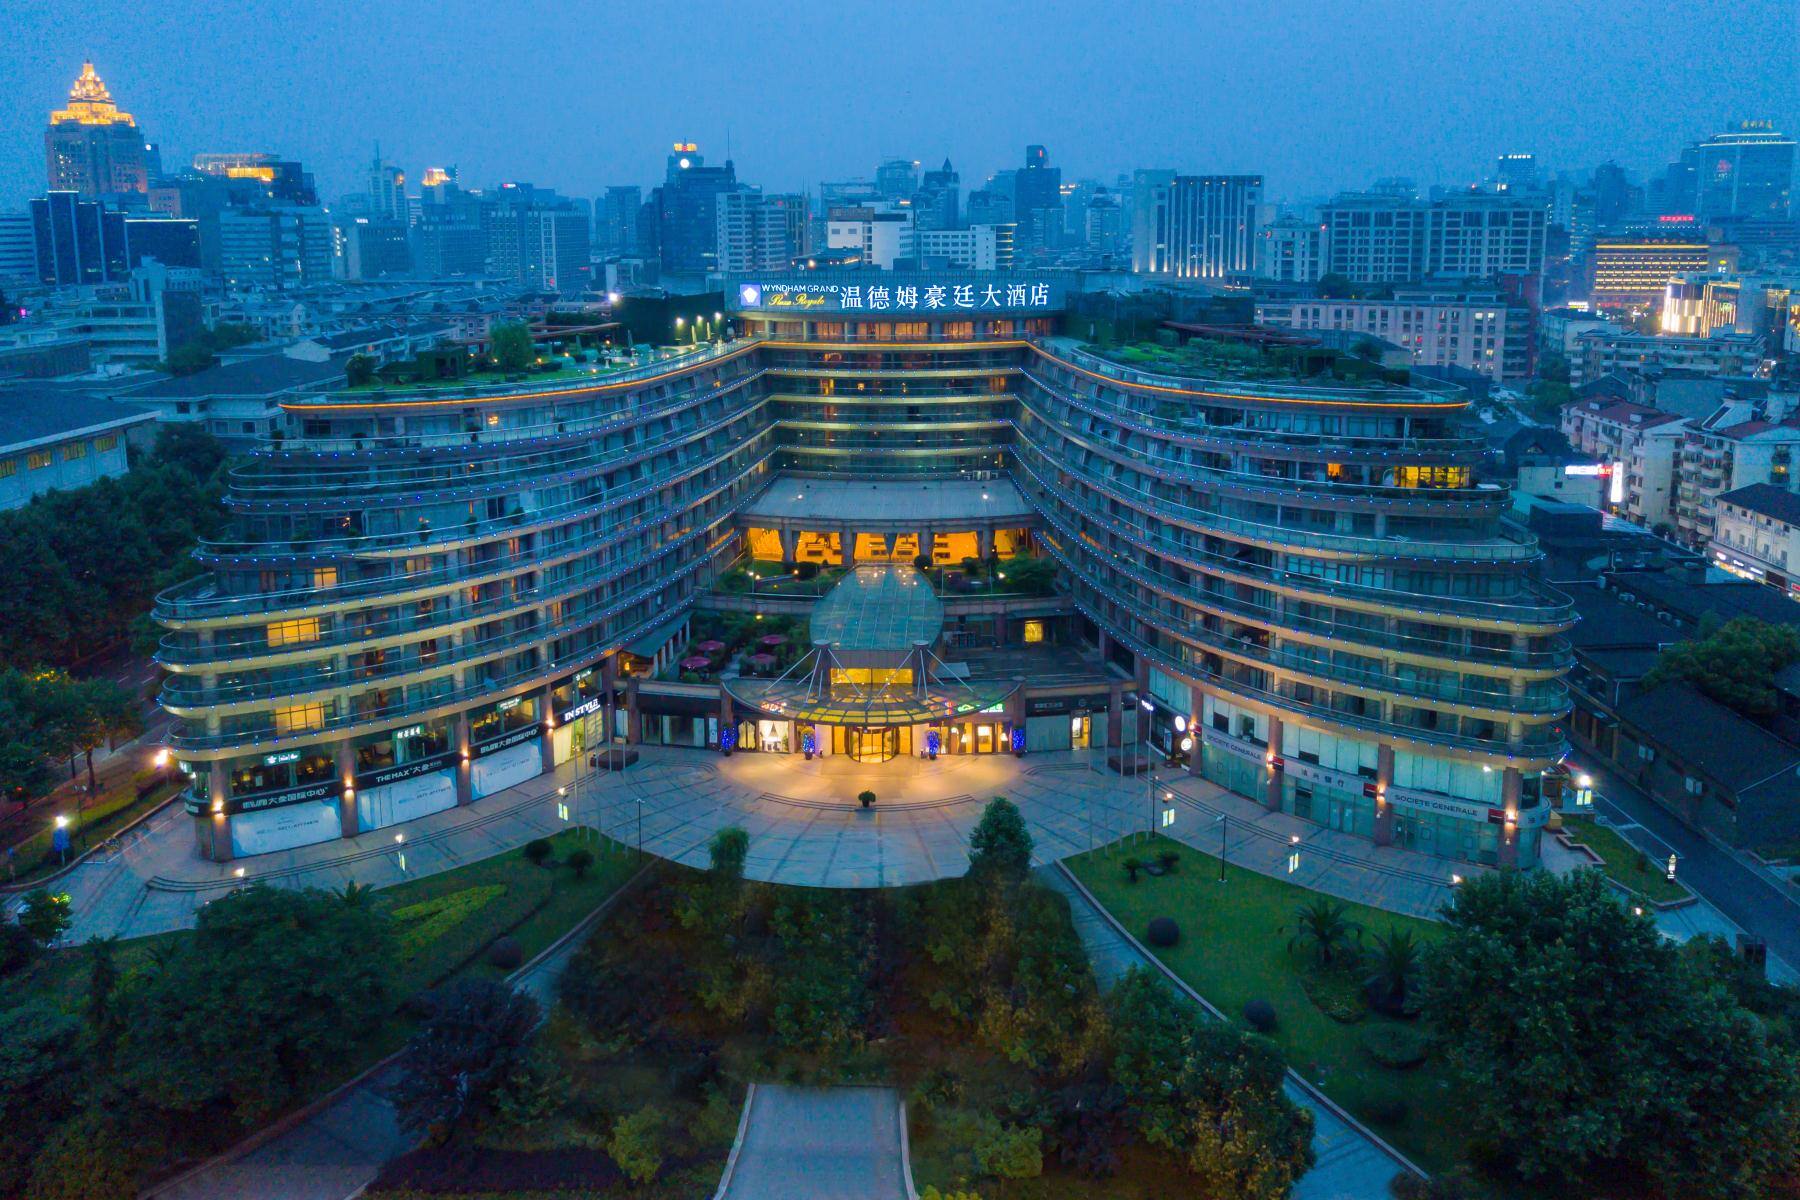 Wyndham Grand Plaza Royale Hangzhou - Image1